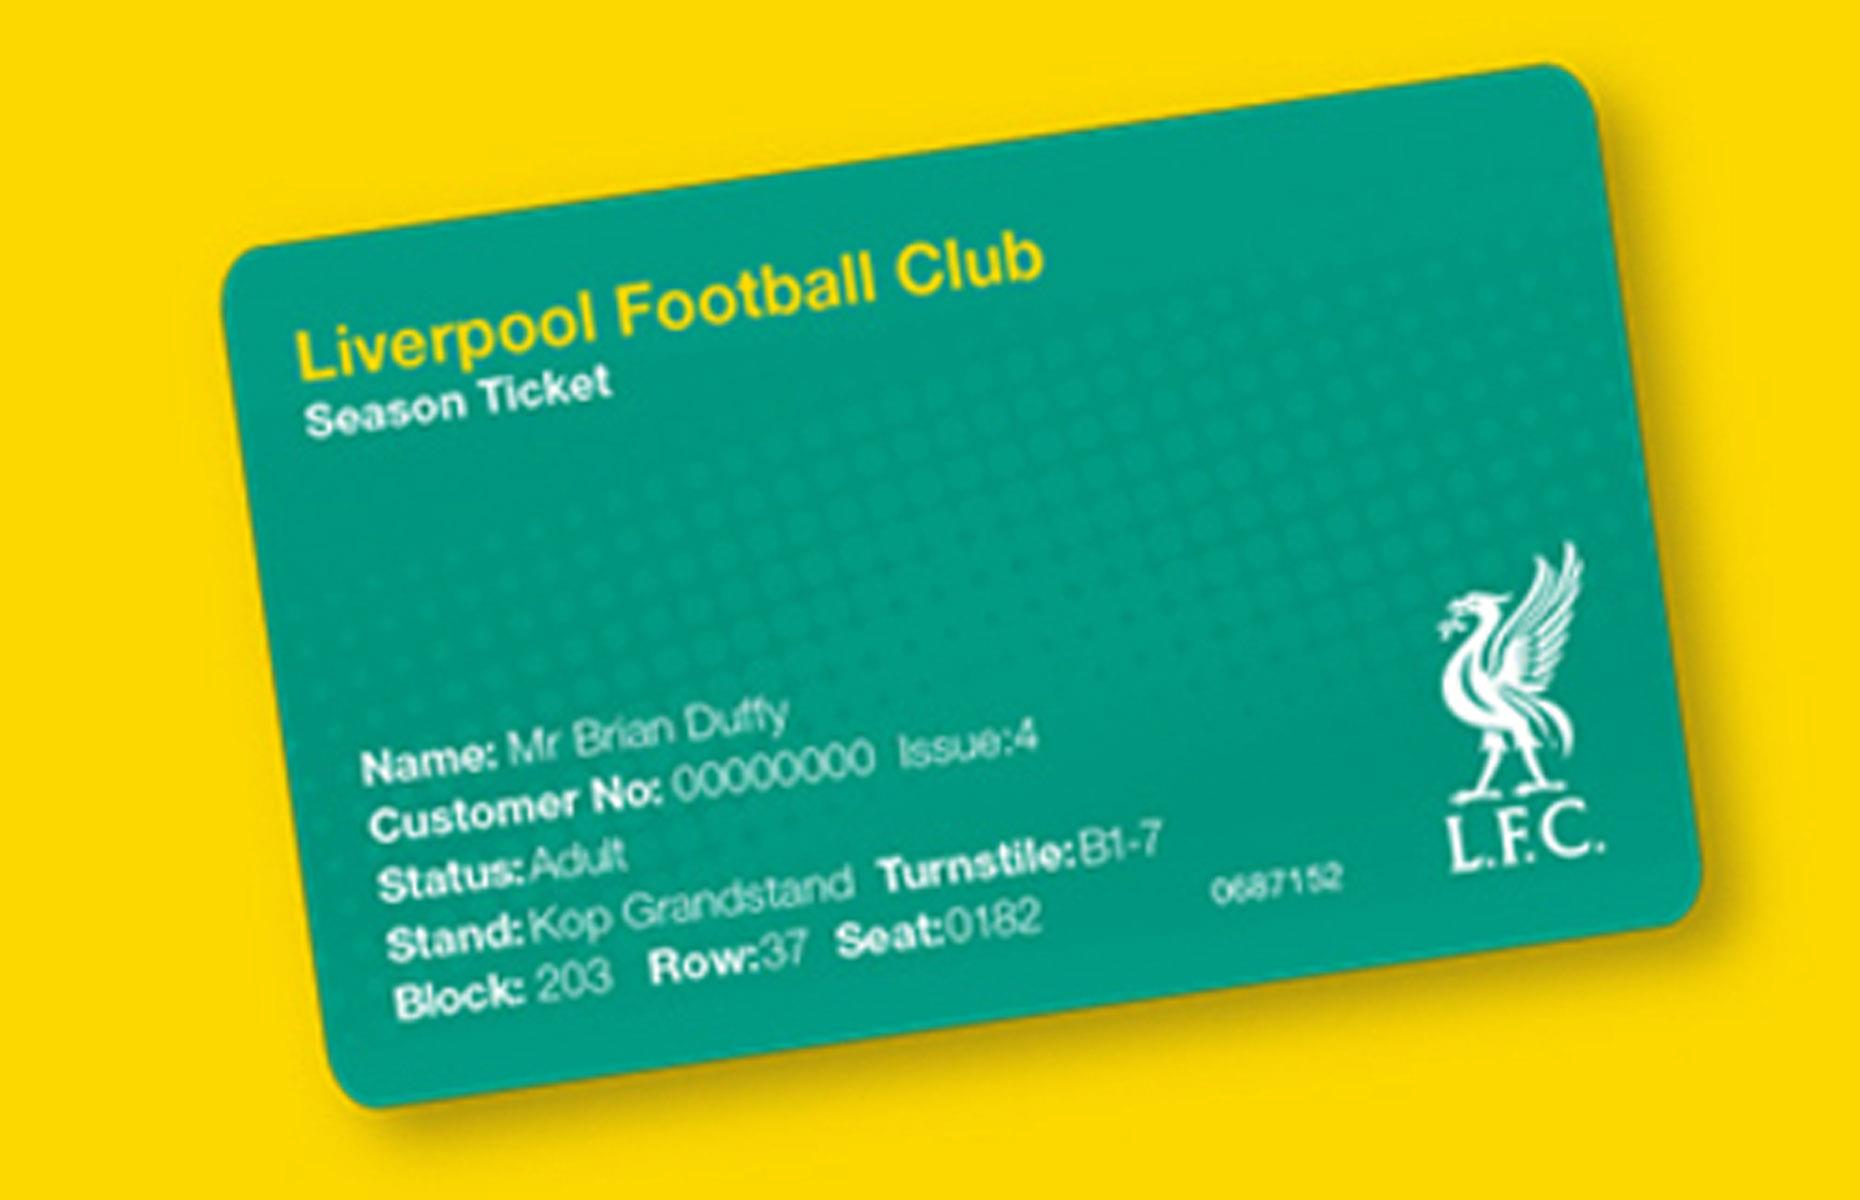 Liverpool FC season ticket: 20+ years